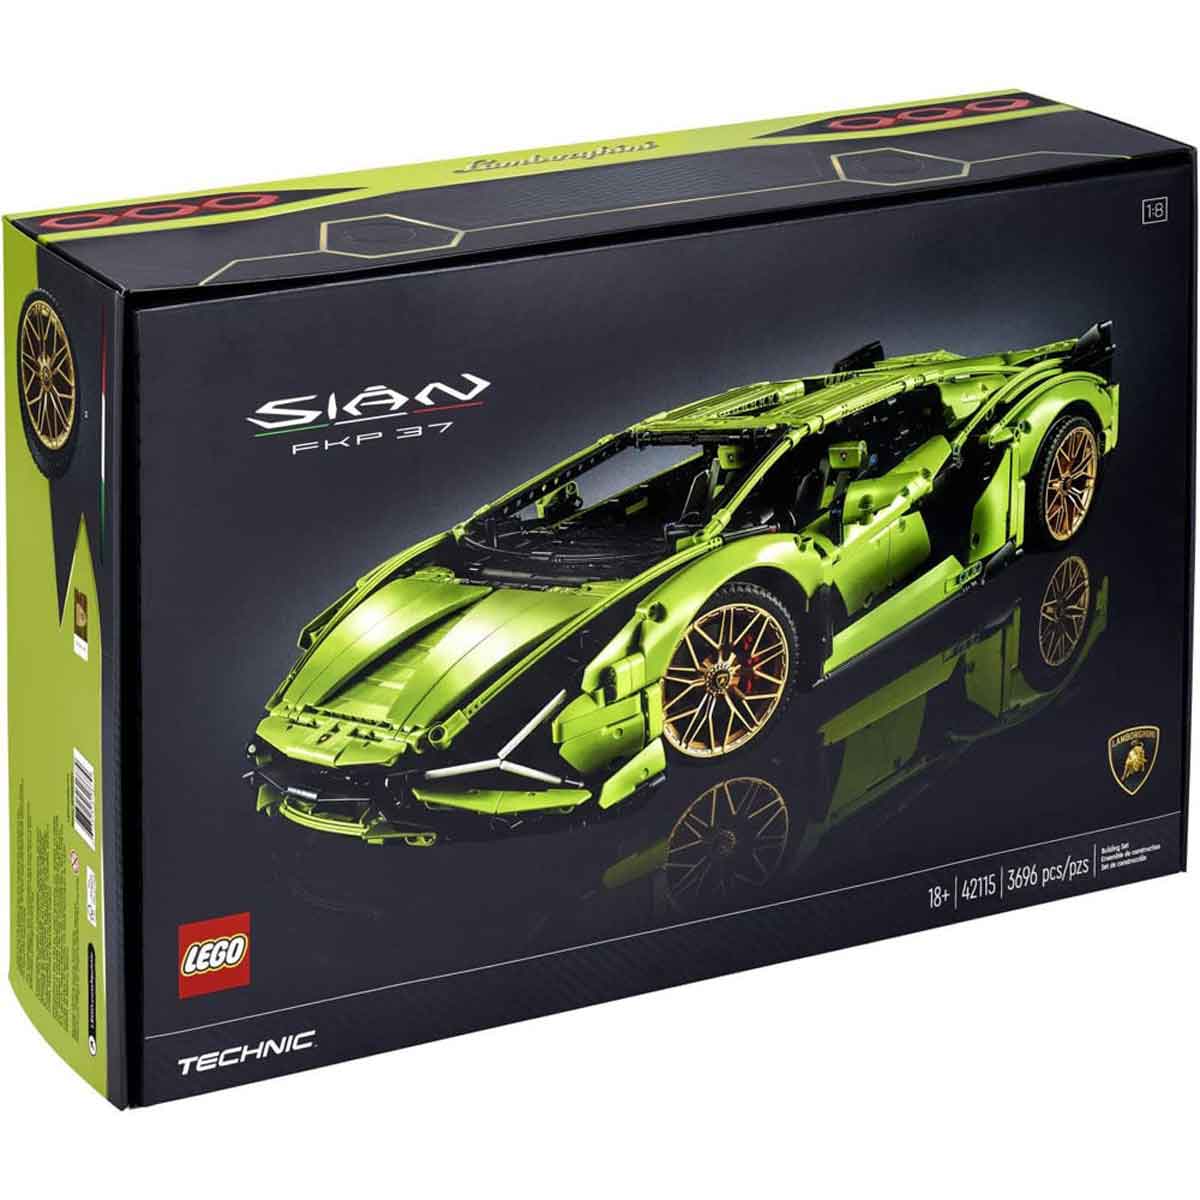 Lego Technic Lamborghini Fkp 37 42115